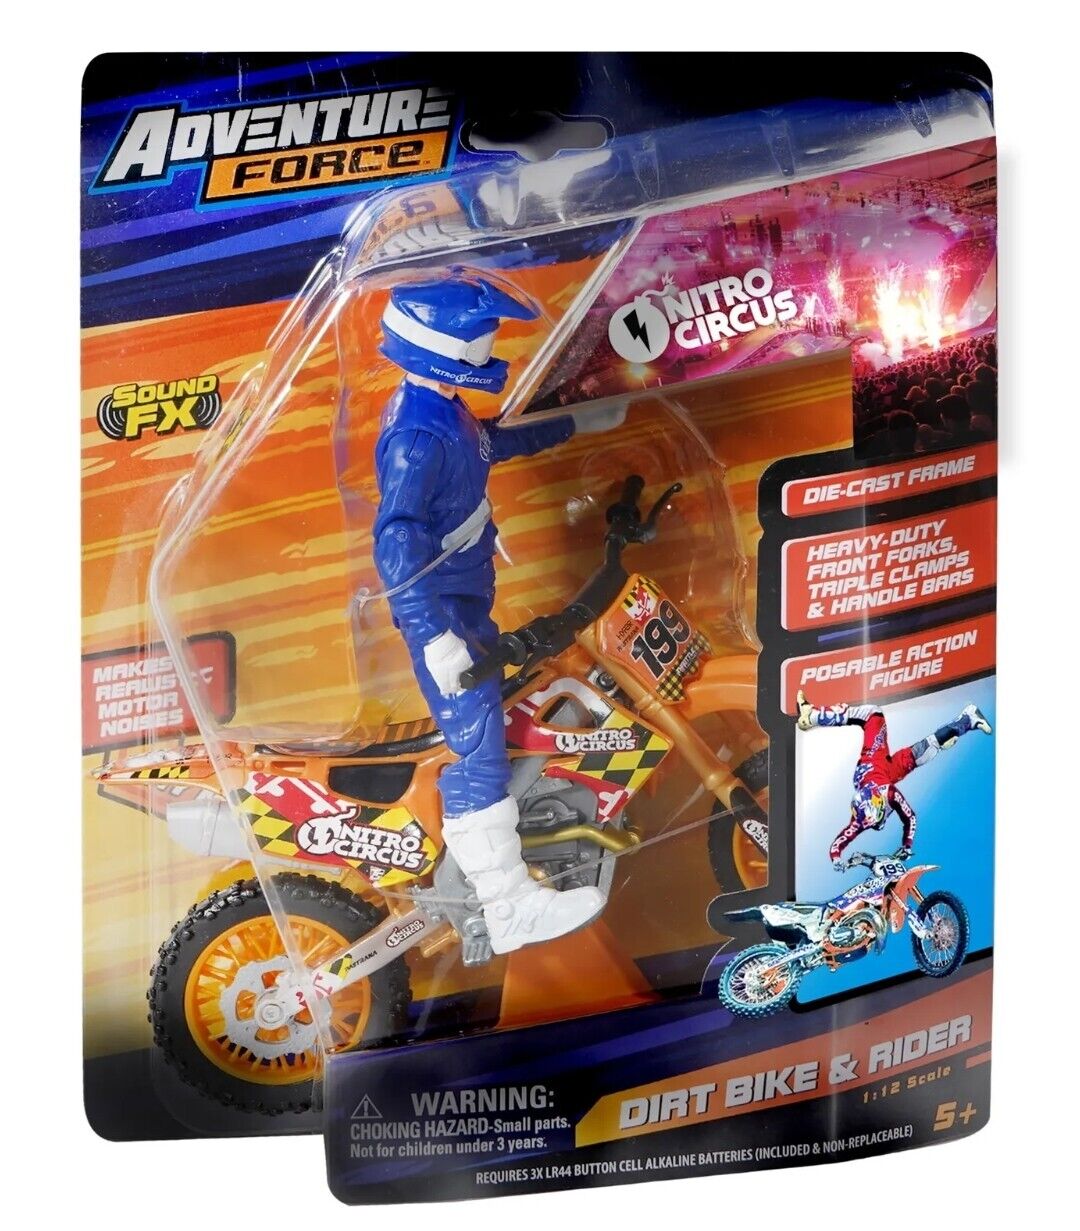 Adventure Force Nitro Circus Dirt Bike with Rider Toy, 1:12 Replica, Orange 🆕